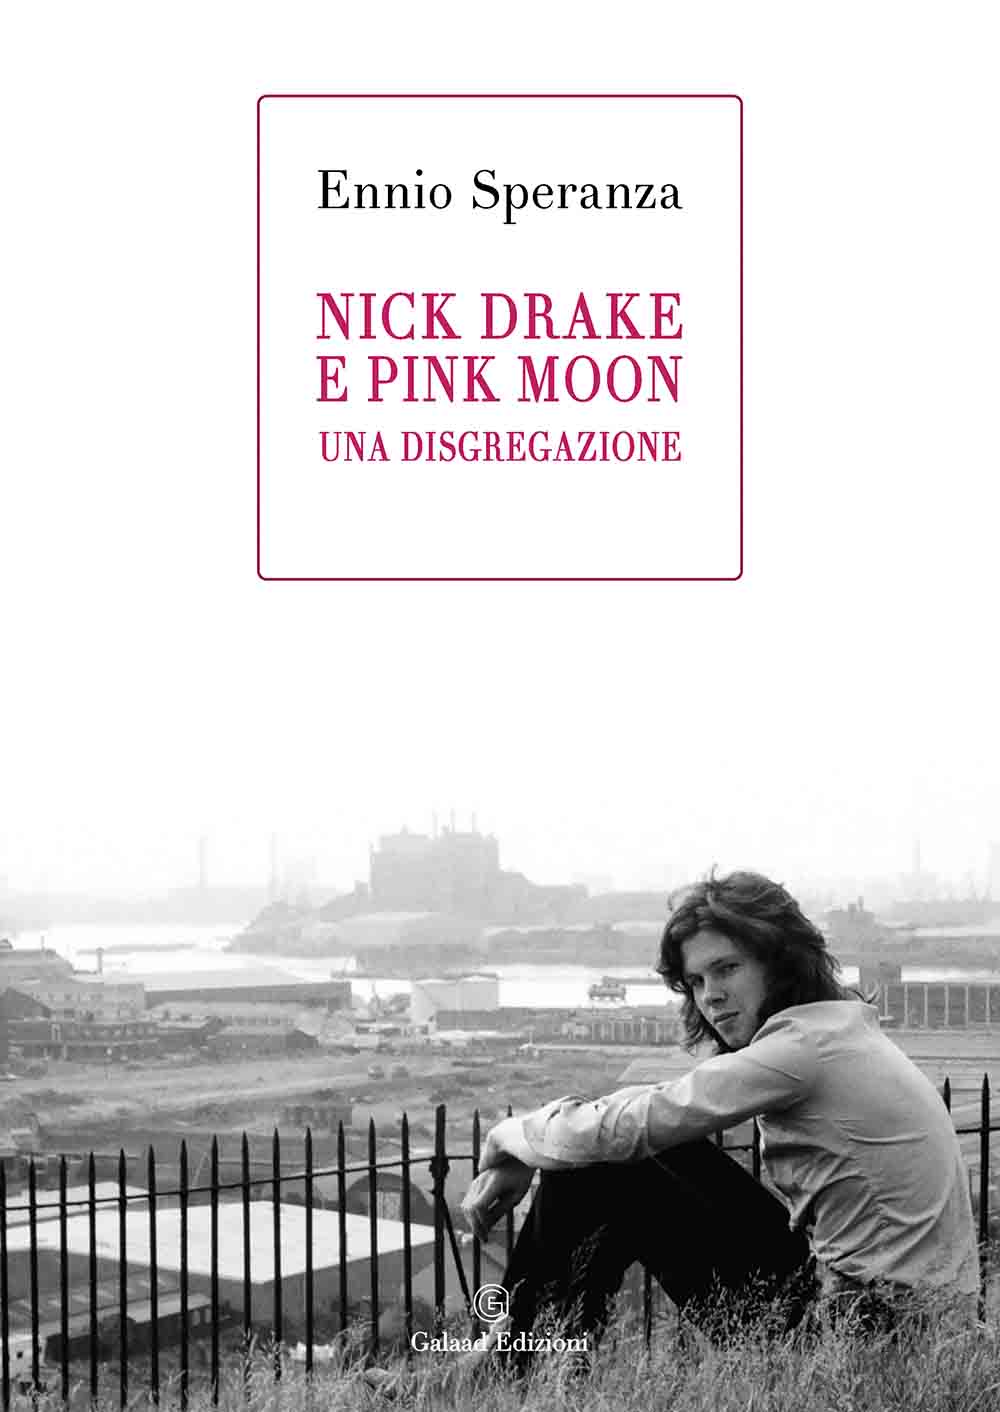 Nick Drake Pink Moon Ennio Speranza